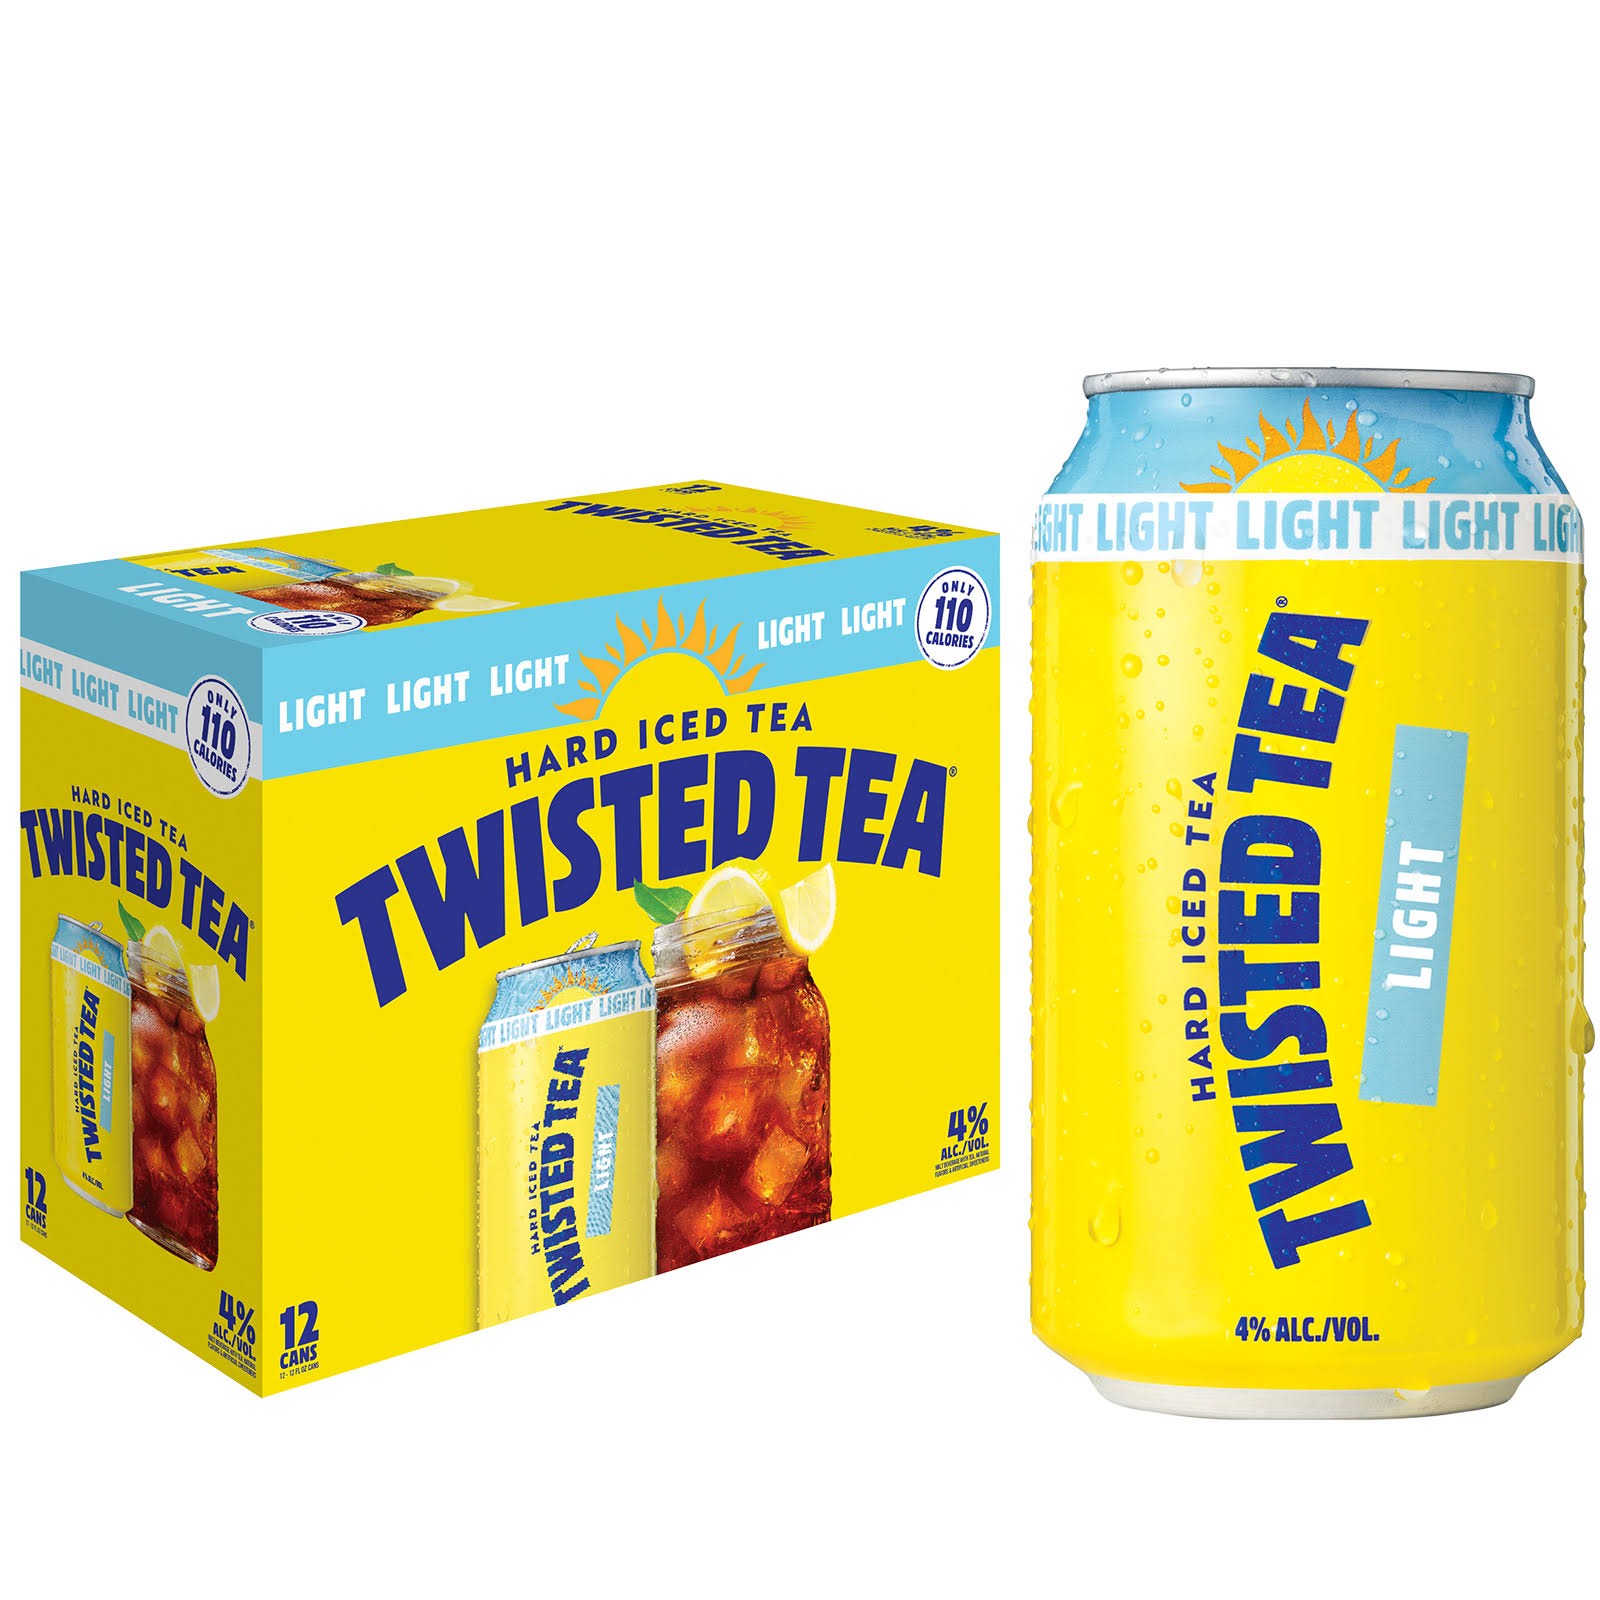 Twisted Tea Hard Iced Tea, Light - 12 pack, 12 fl oz cans